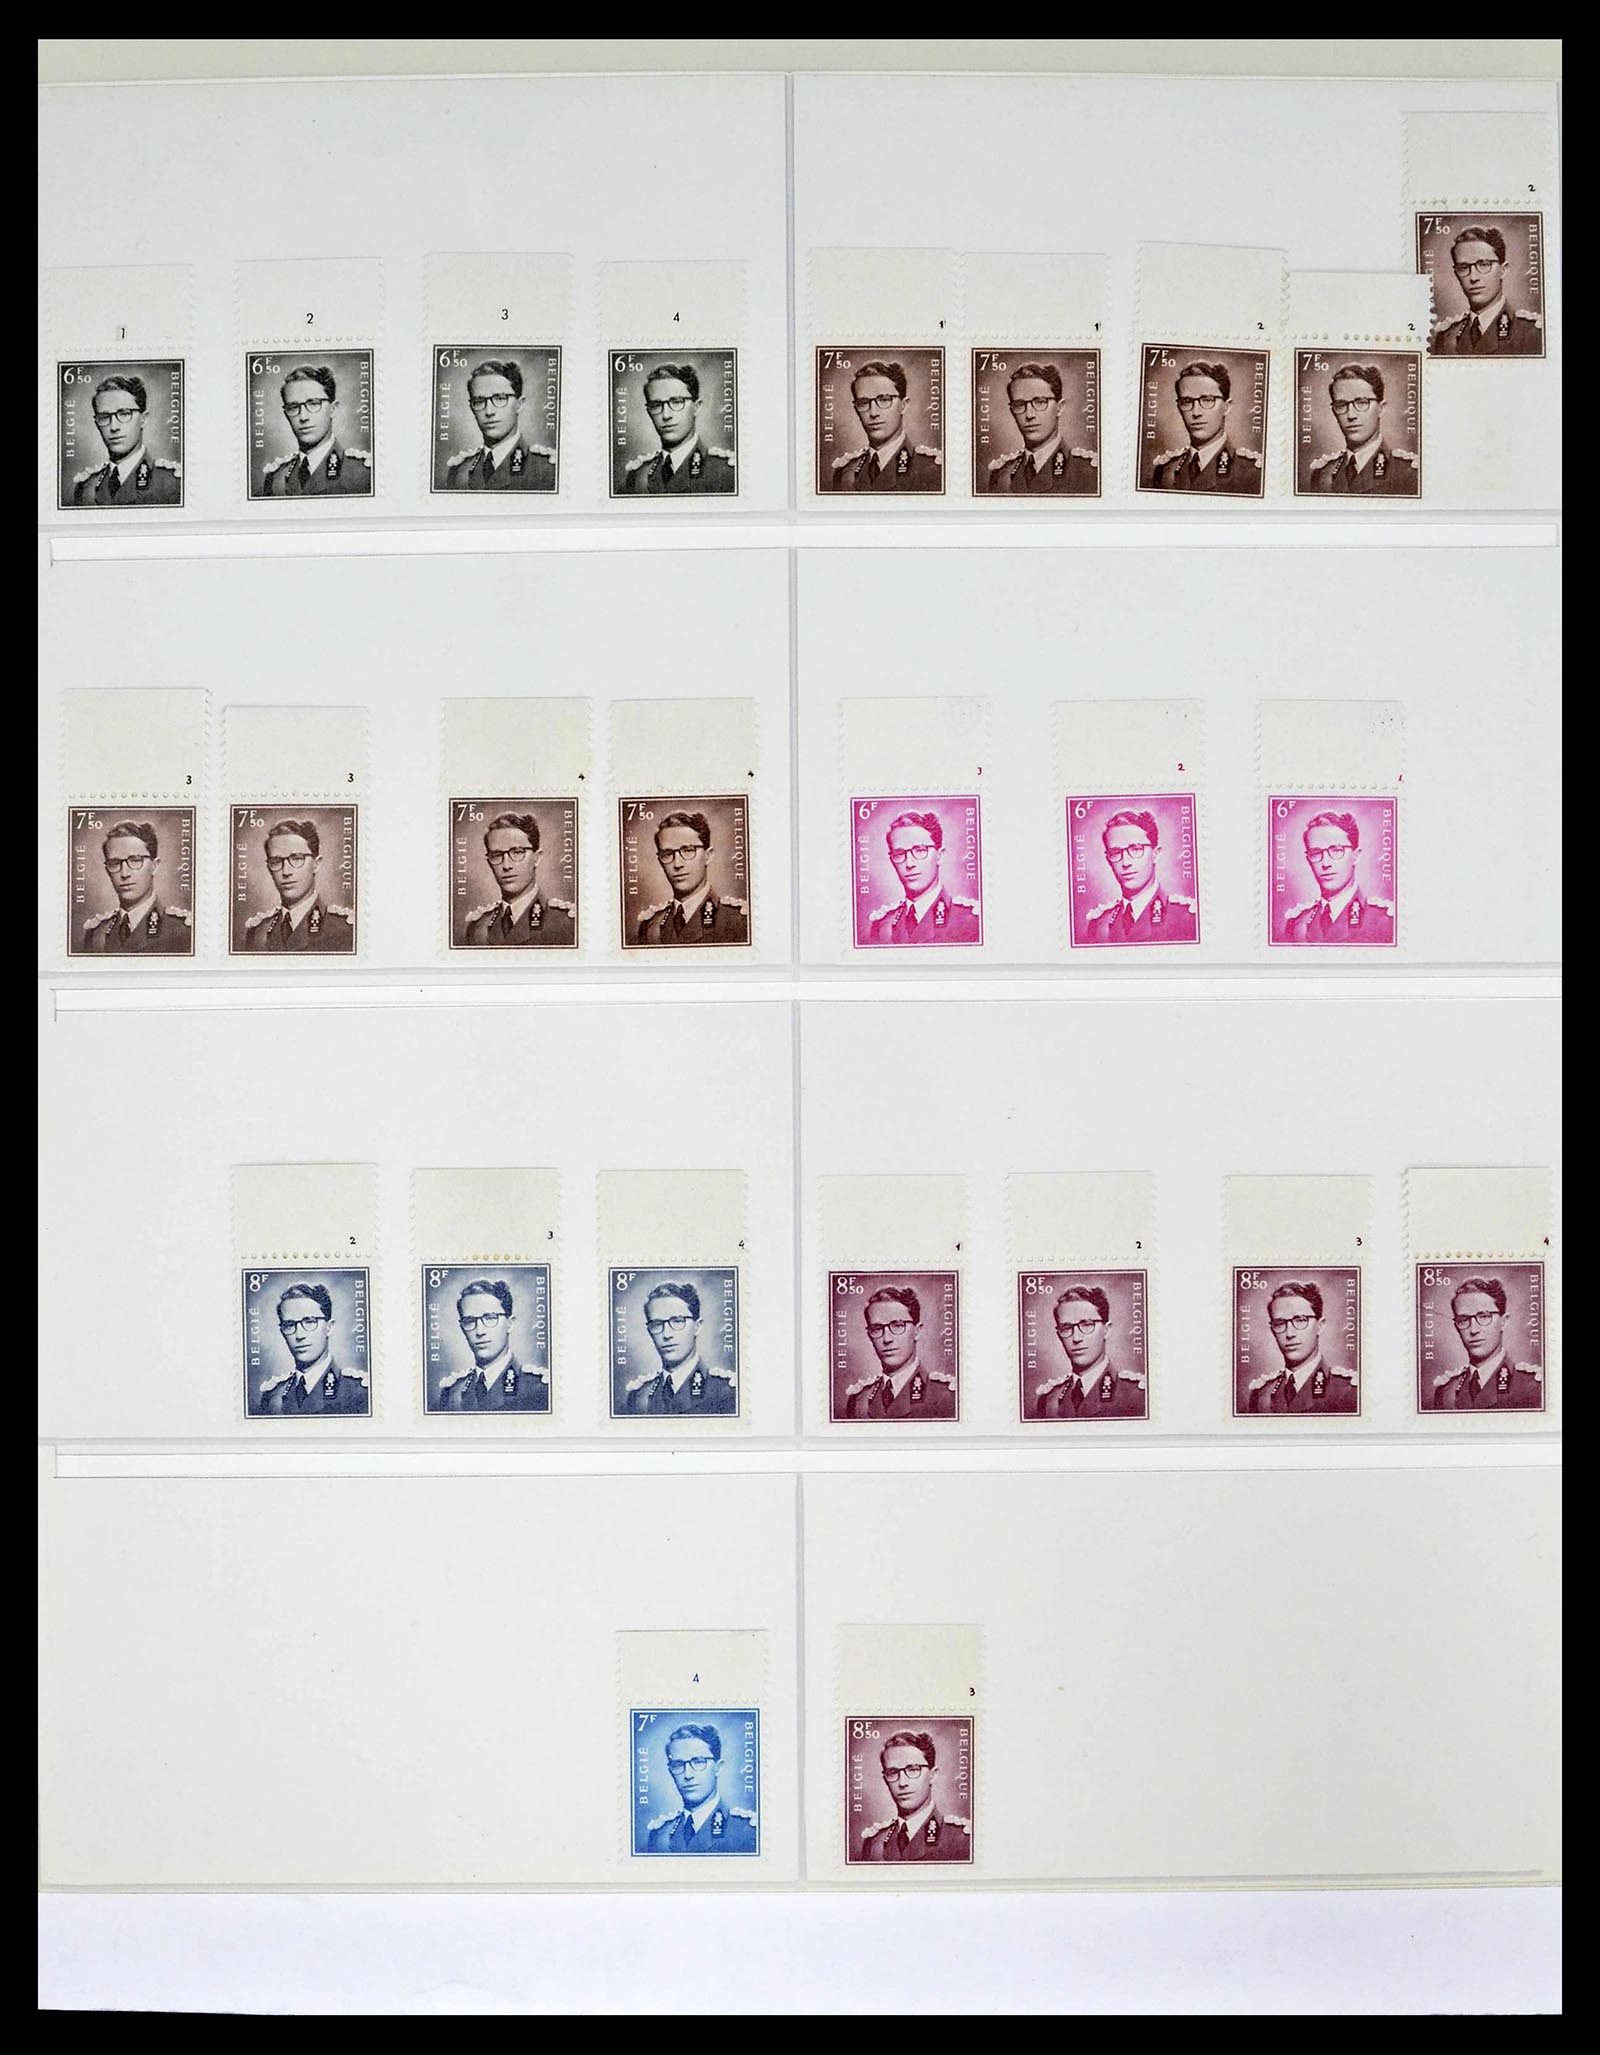 39229 0014 - Stamp collection 39229 Belgium Boudewijn with glasses 1952-1975.